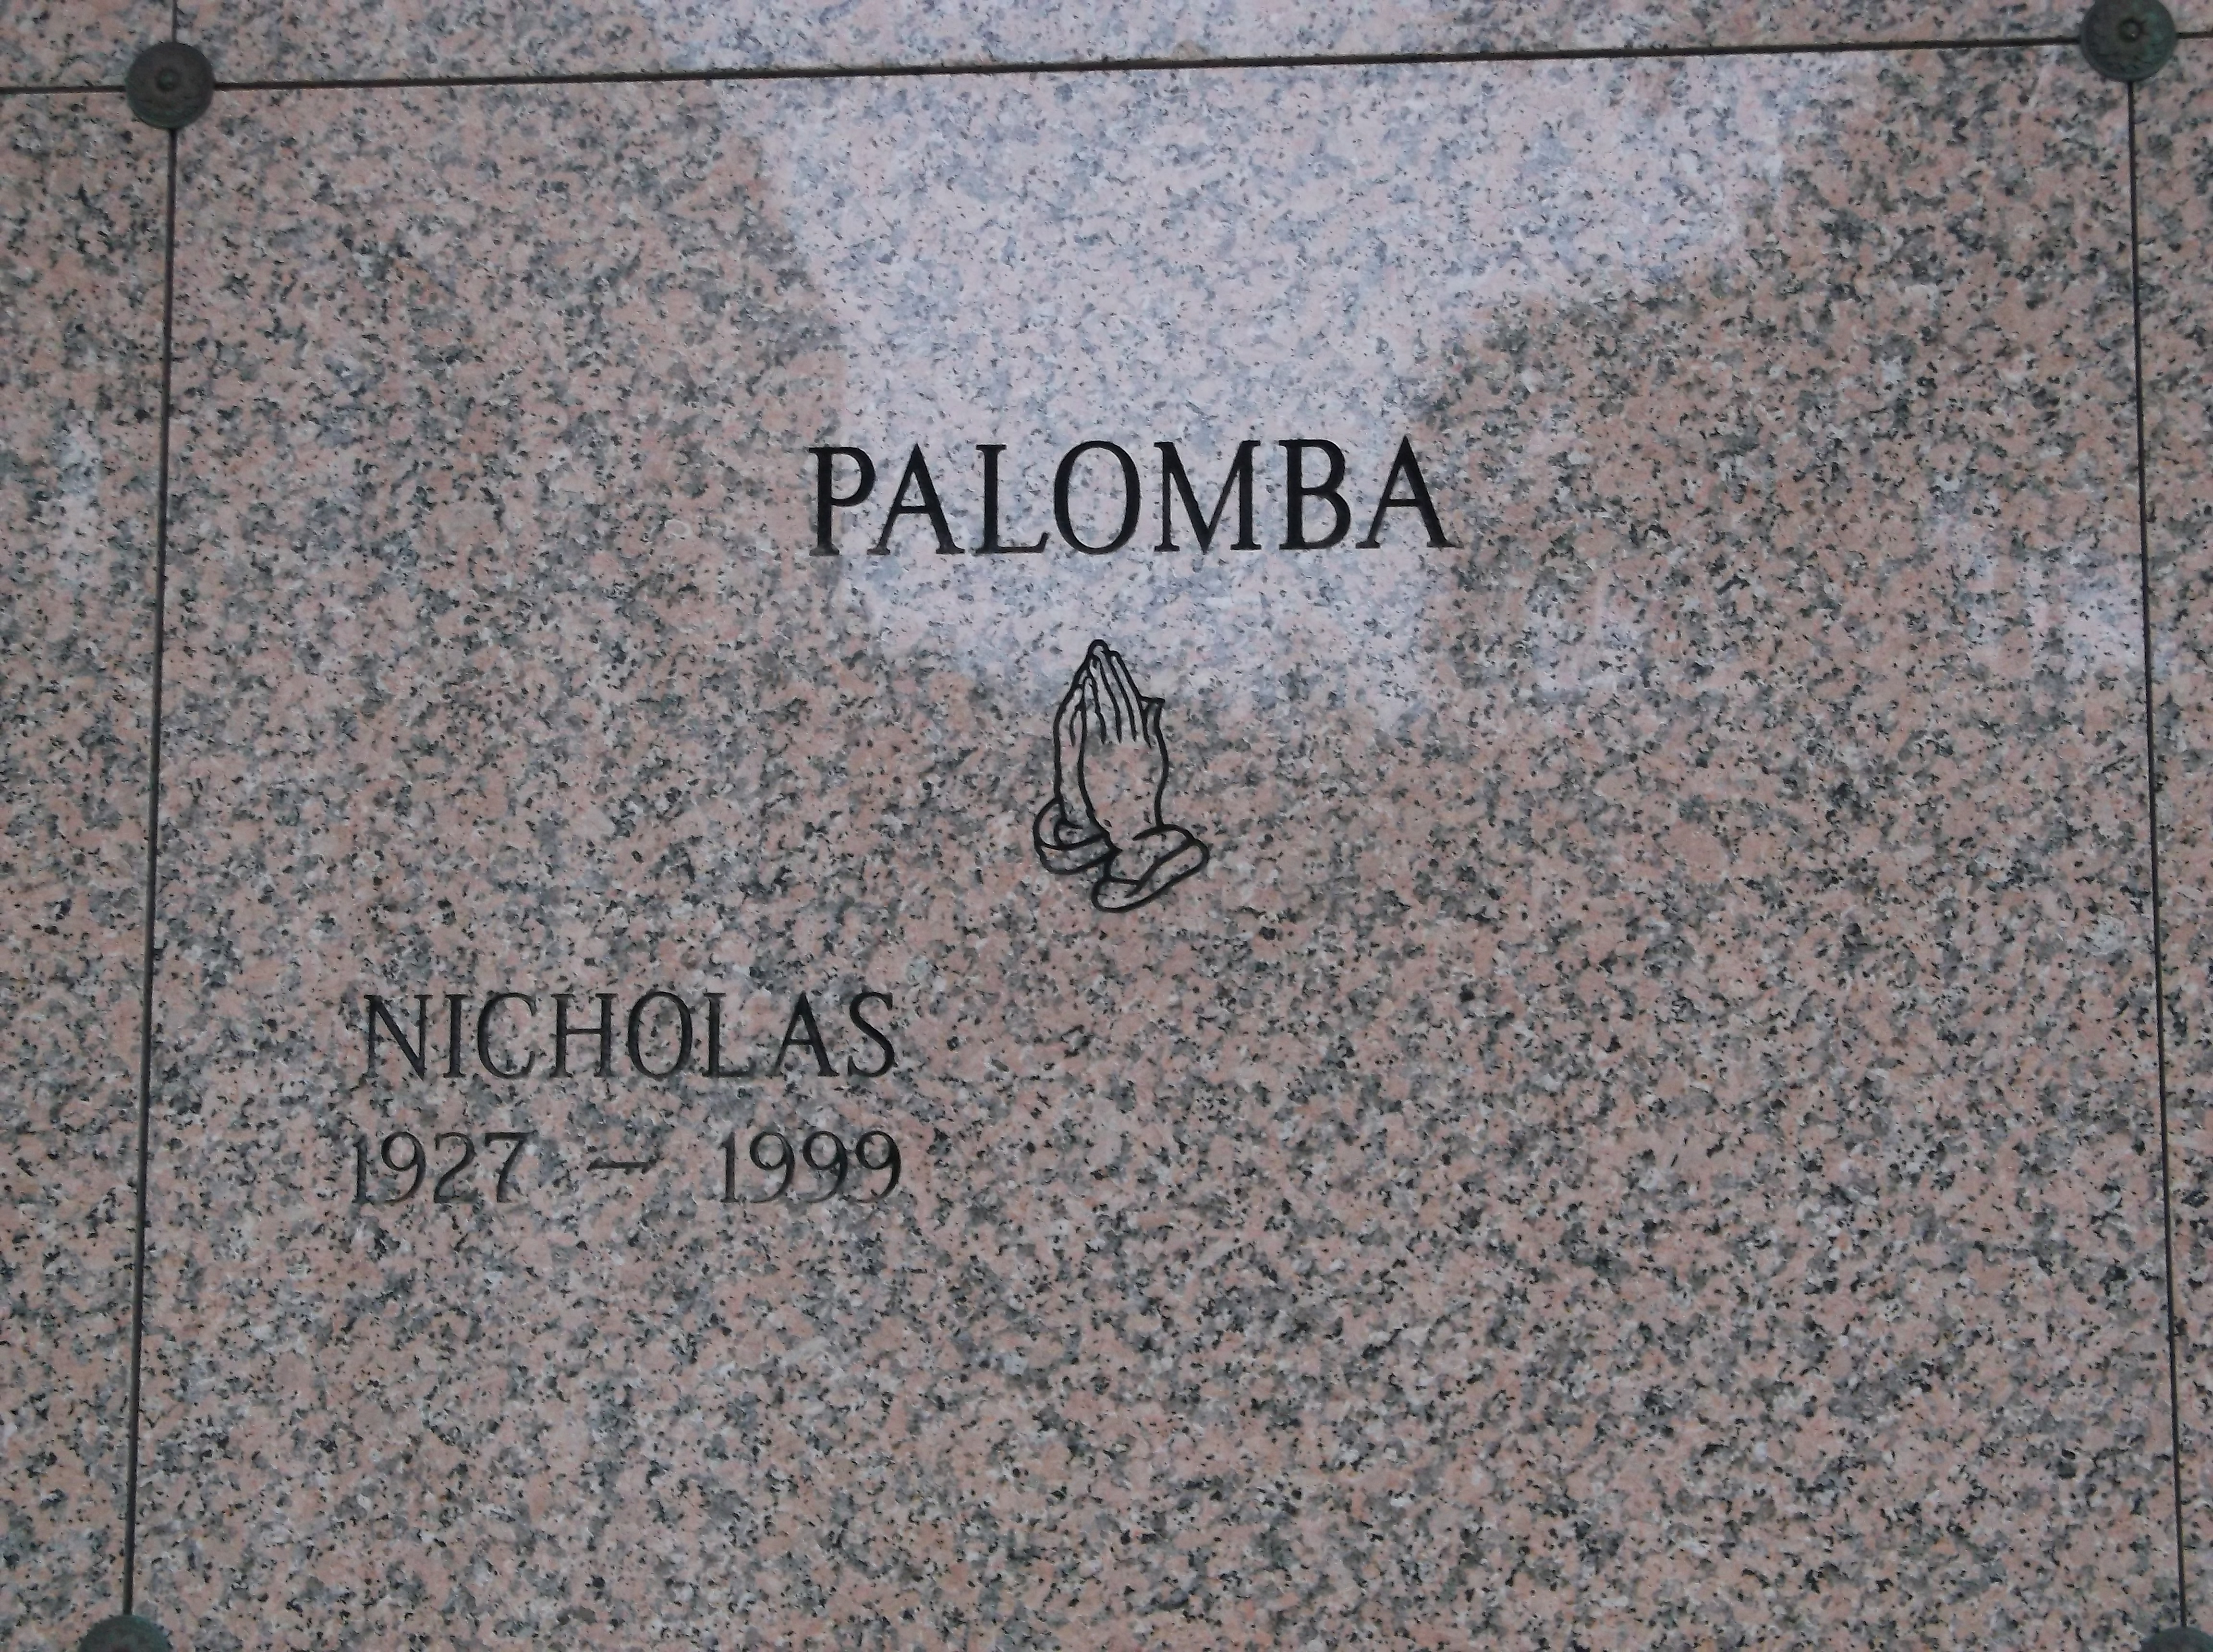 Nicholas Palomba